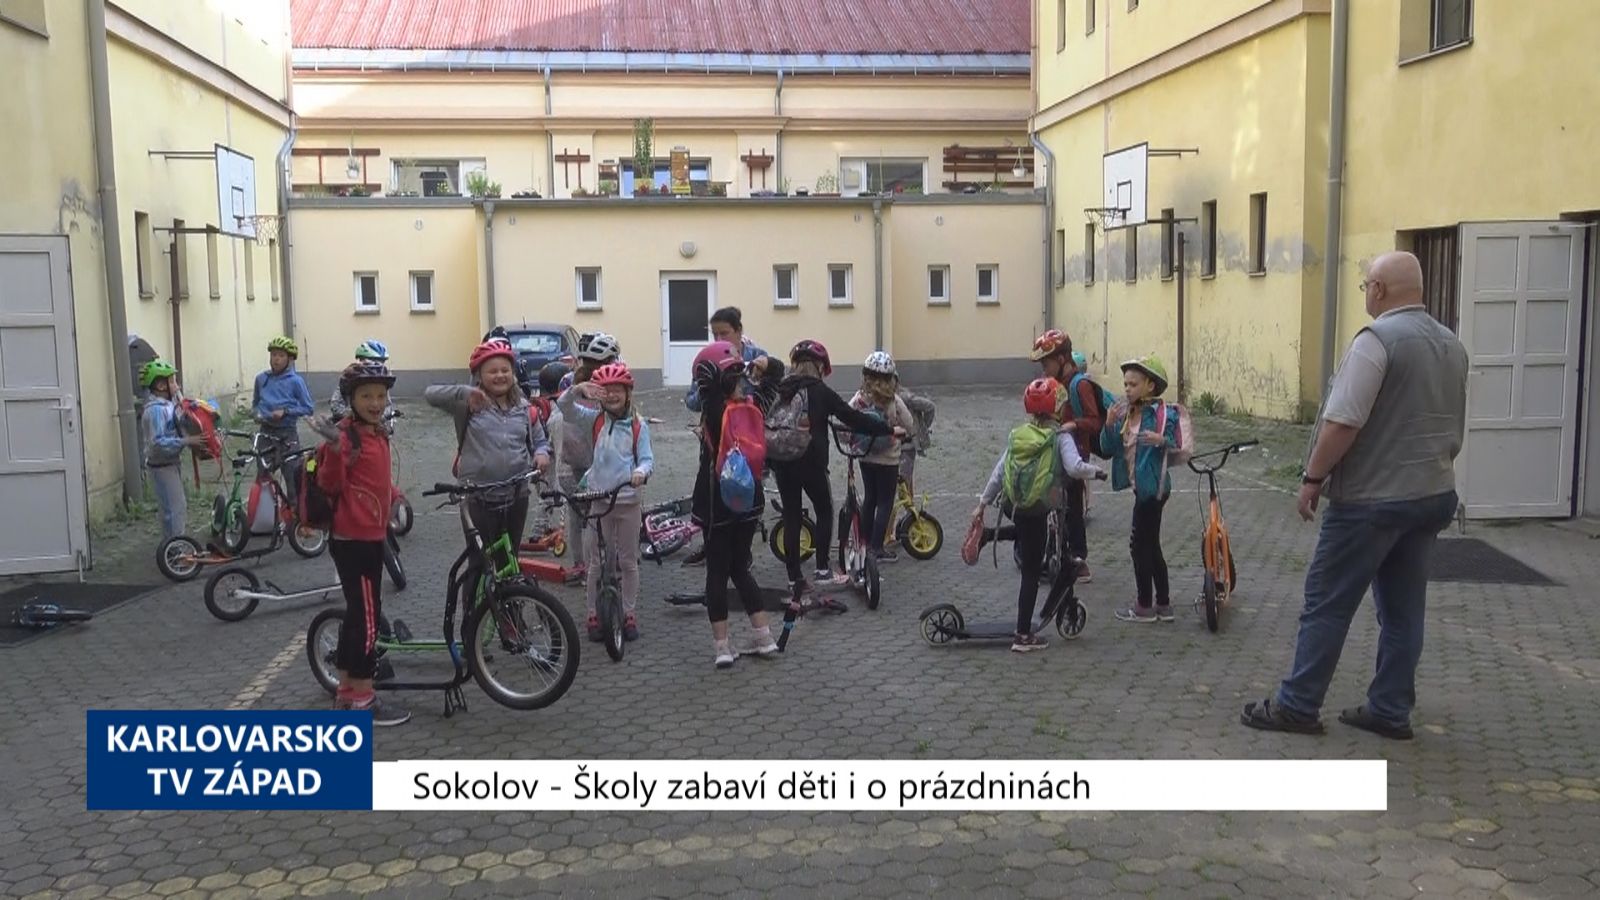 Sokolov: Školy zabaví děti i o prázdninách (TV Západ)	